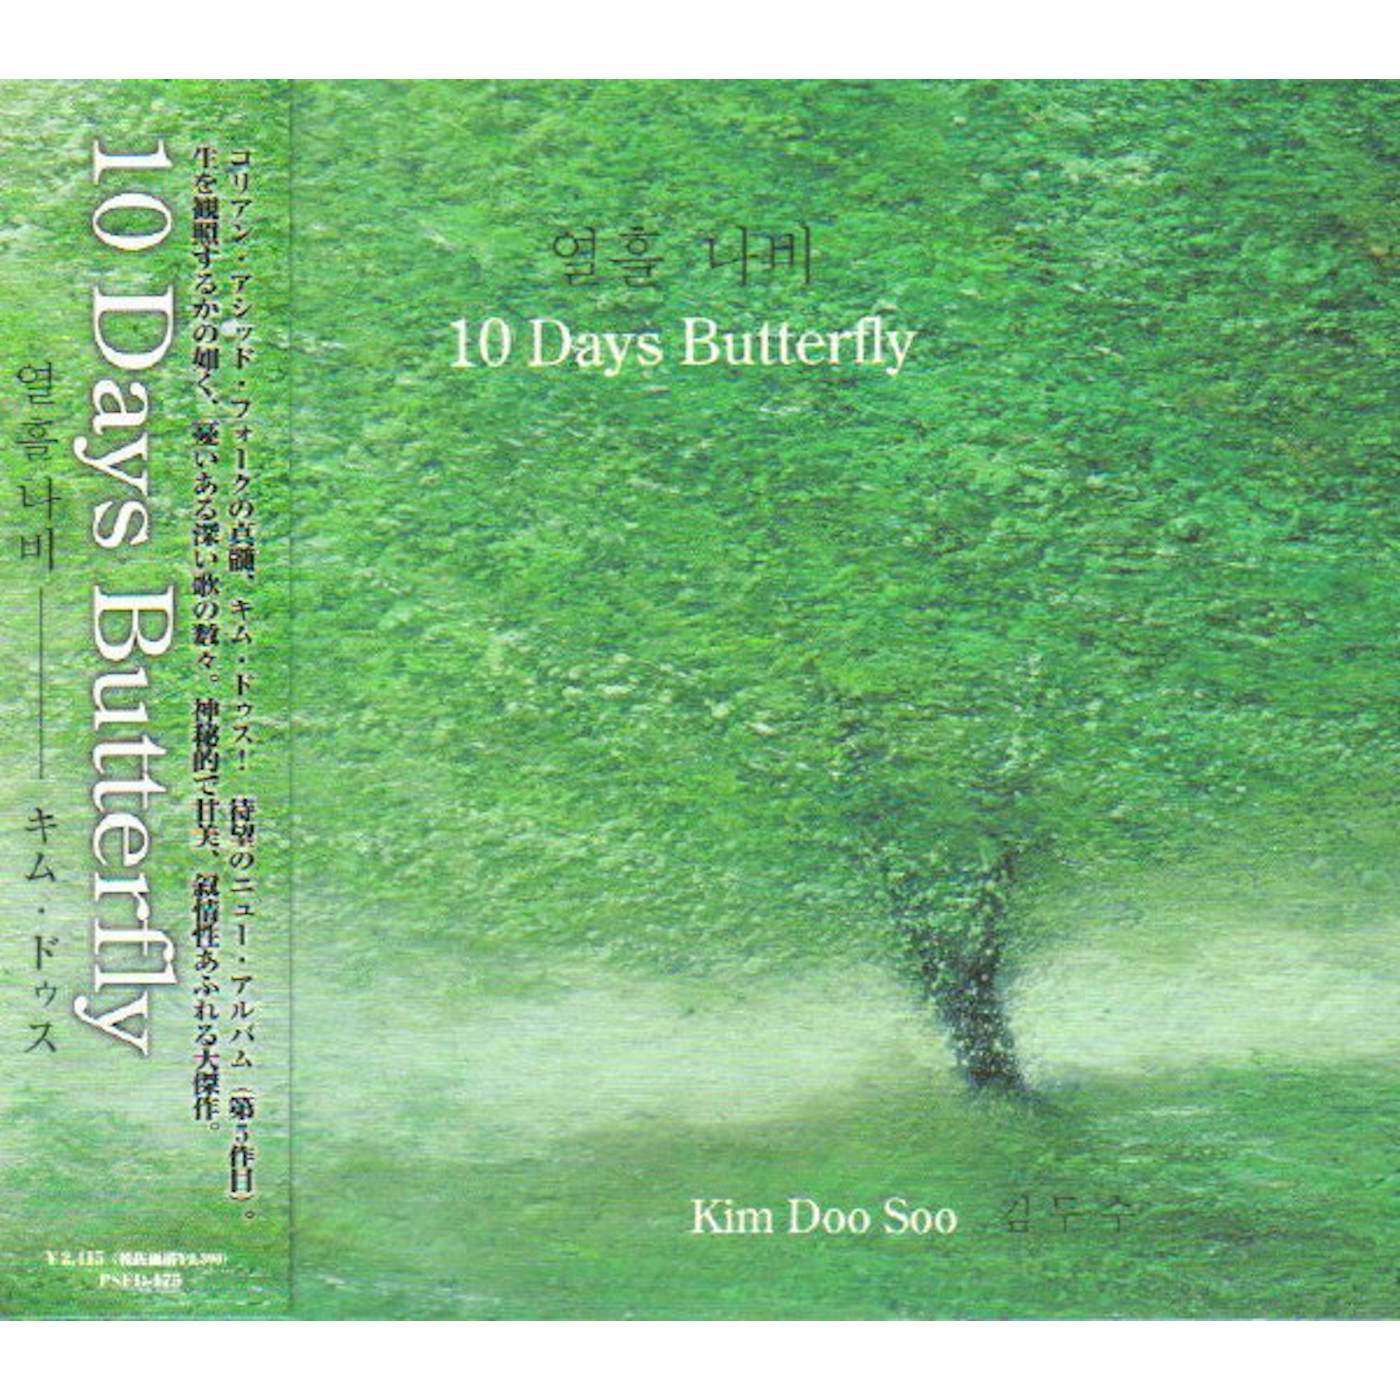 Kim Doo soo 10 Days Butterfly Vinyl Record